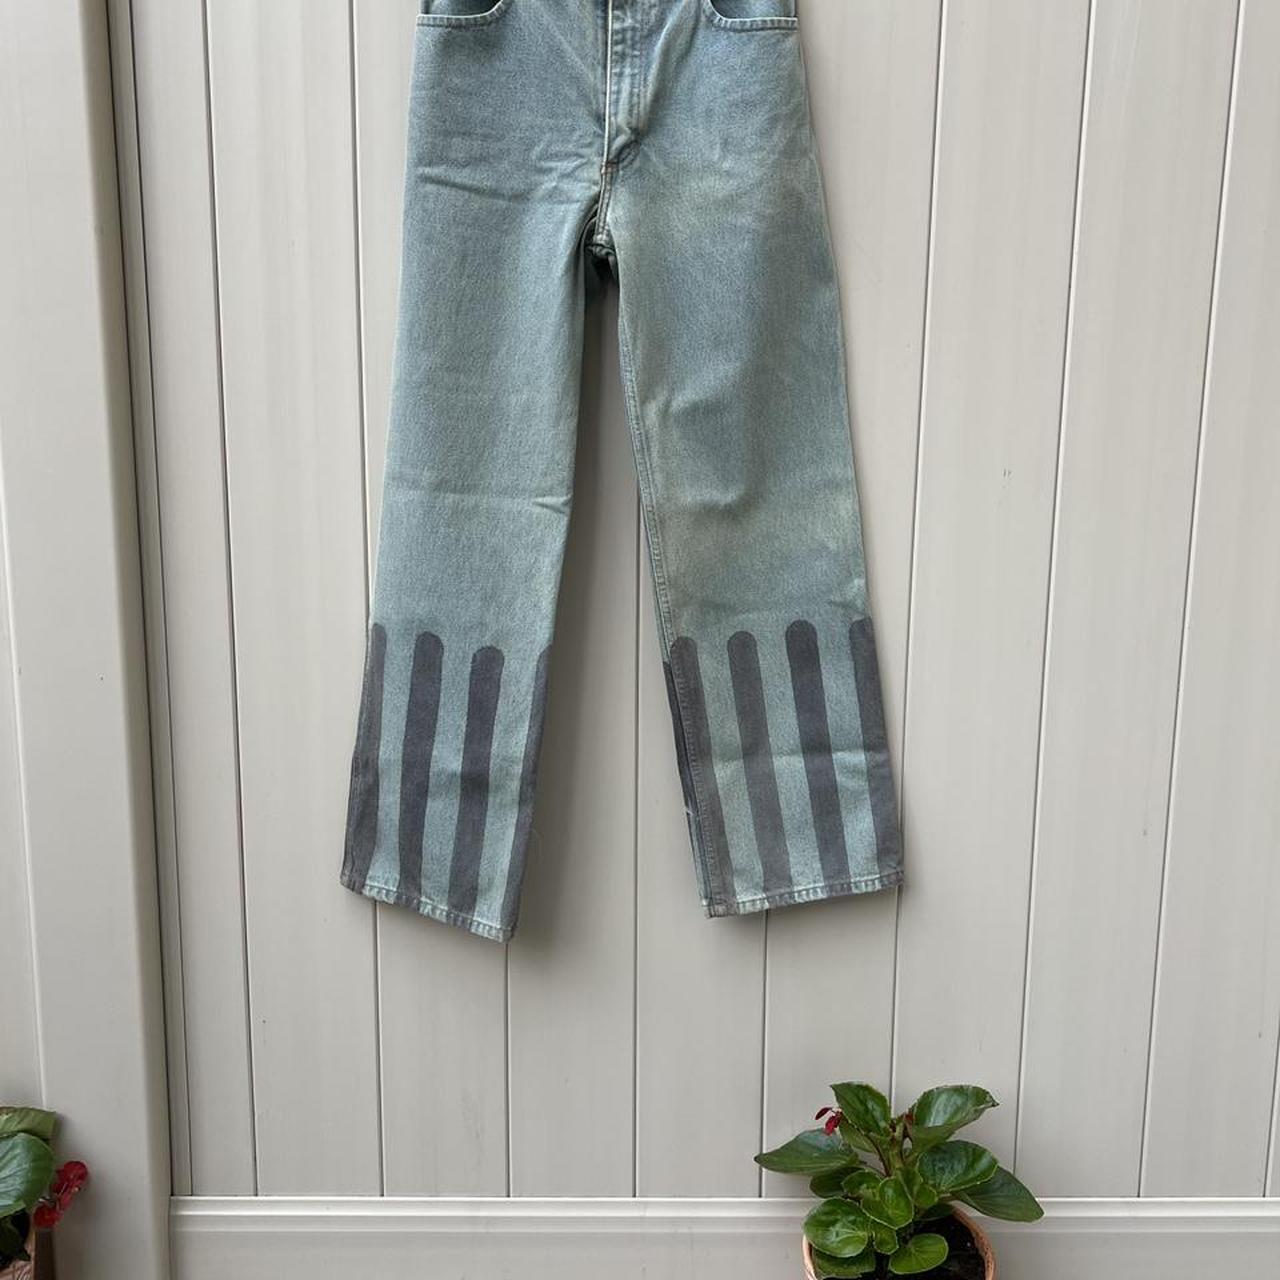 Eckhaus Latta Women's Jeans